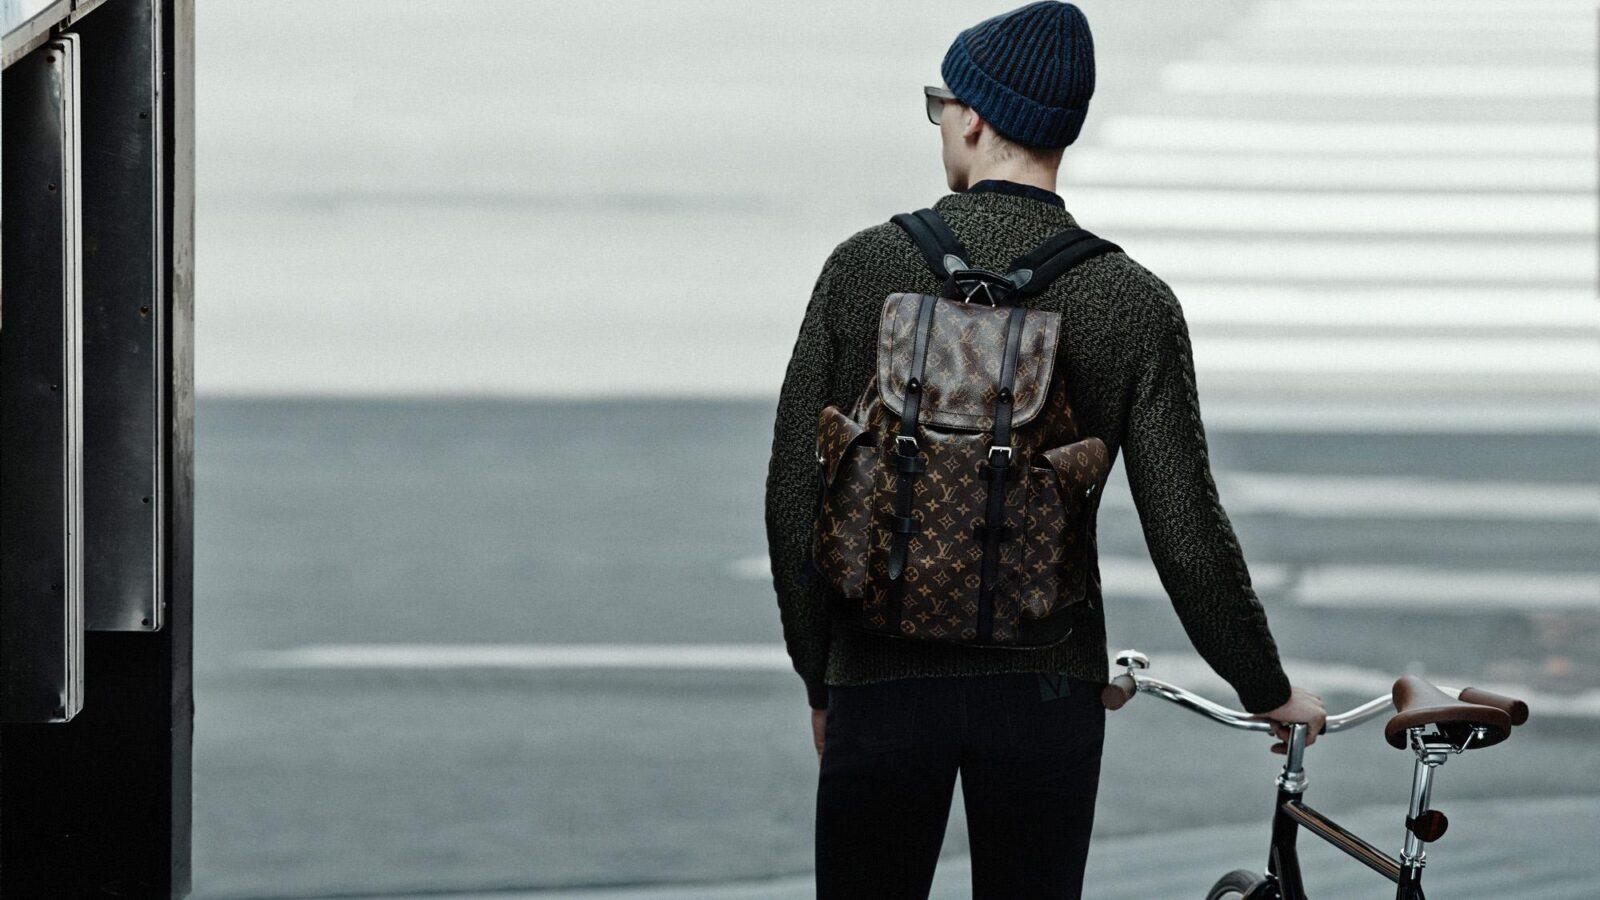 Фото мужчины с рюкзаком Louis Vuitton